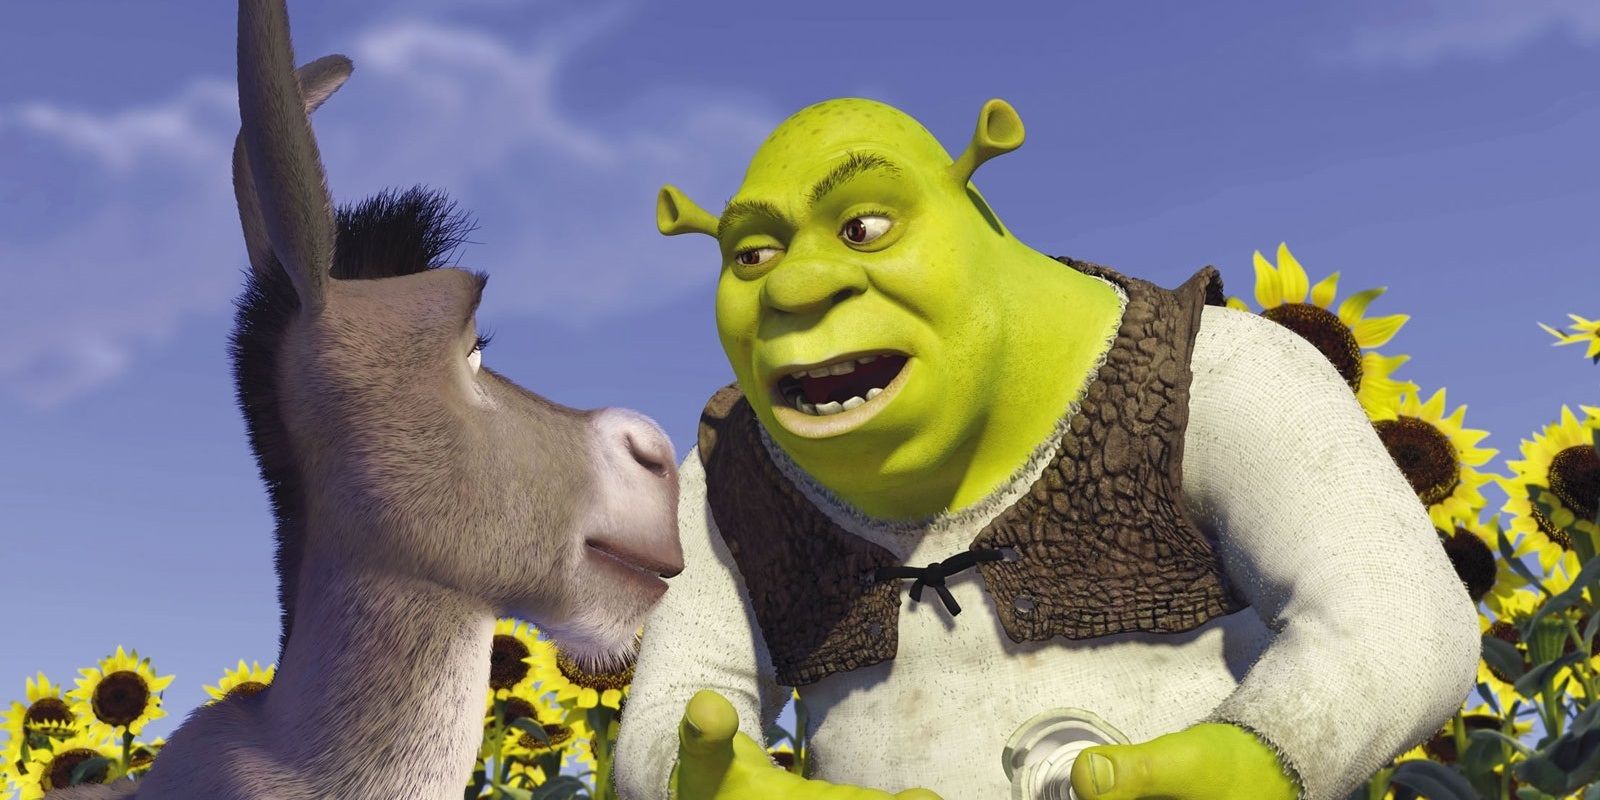 Shrek 5 Jokes That Are Timeless Classics (& 5 That Aged Horribly)